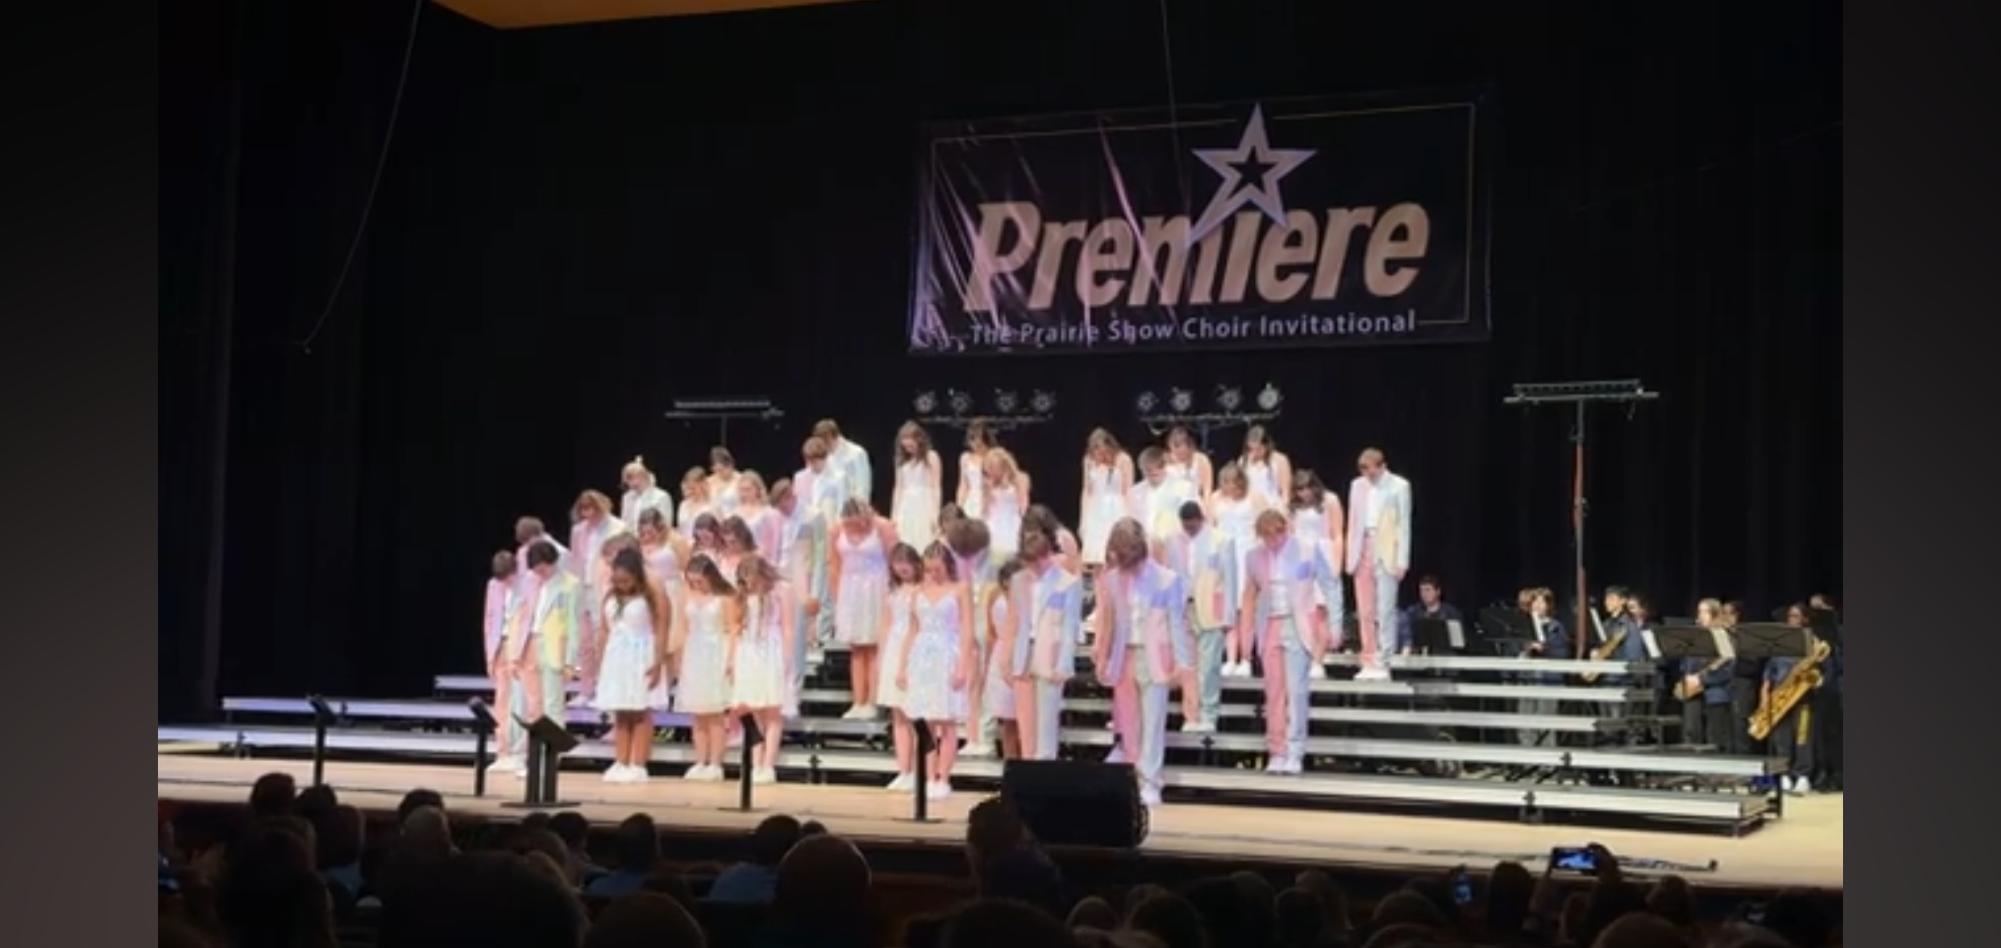 Jefferson High Schools West Side Delegation performs at Prairie Premiere.